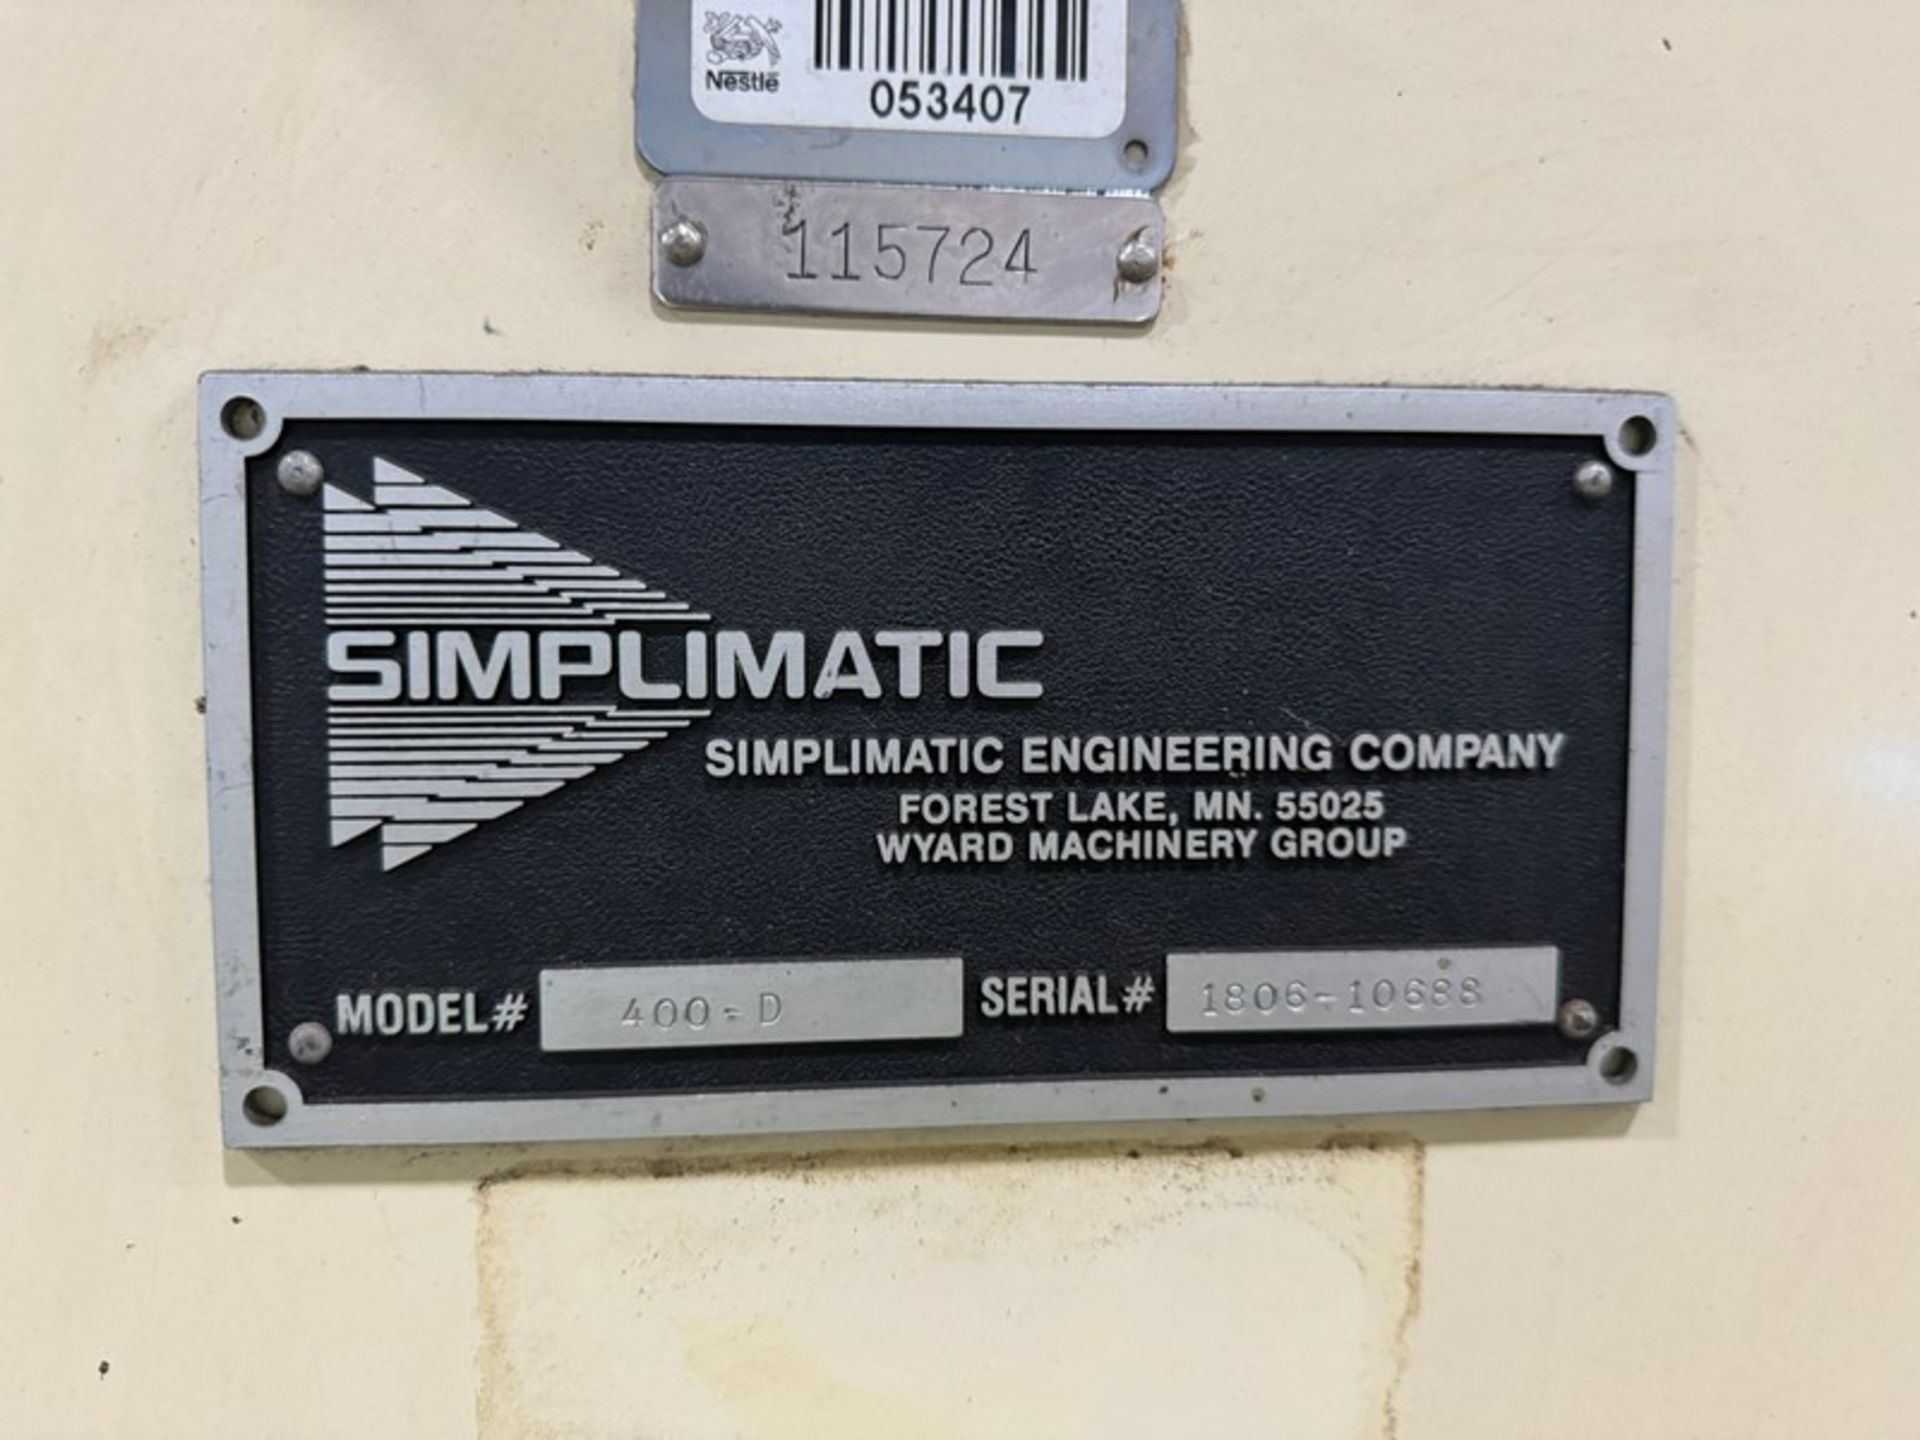 Simplimatic Engineering Company Depalletizer, M/N 400-D, S/N 1806-10688, with 2-Door Control Panel - Bild 8 aus 15